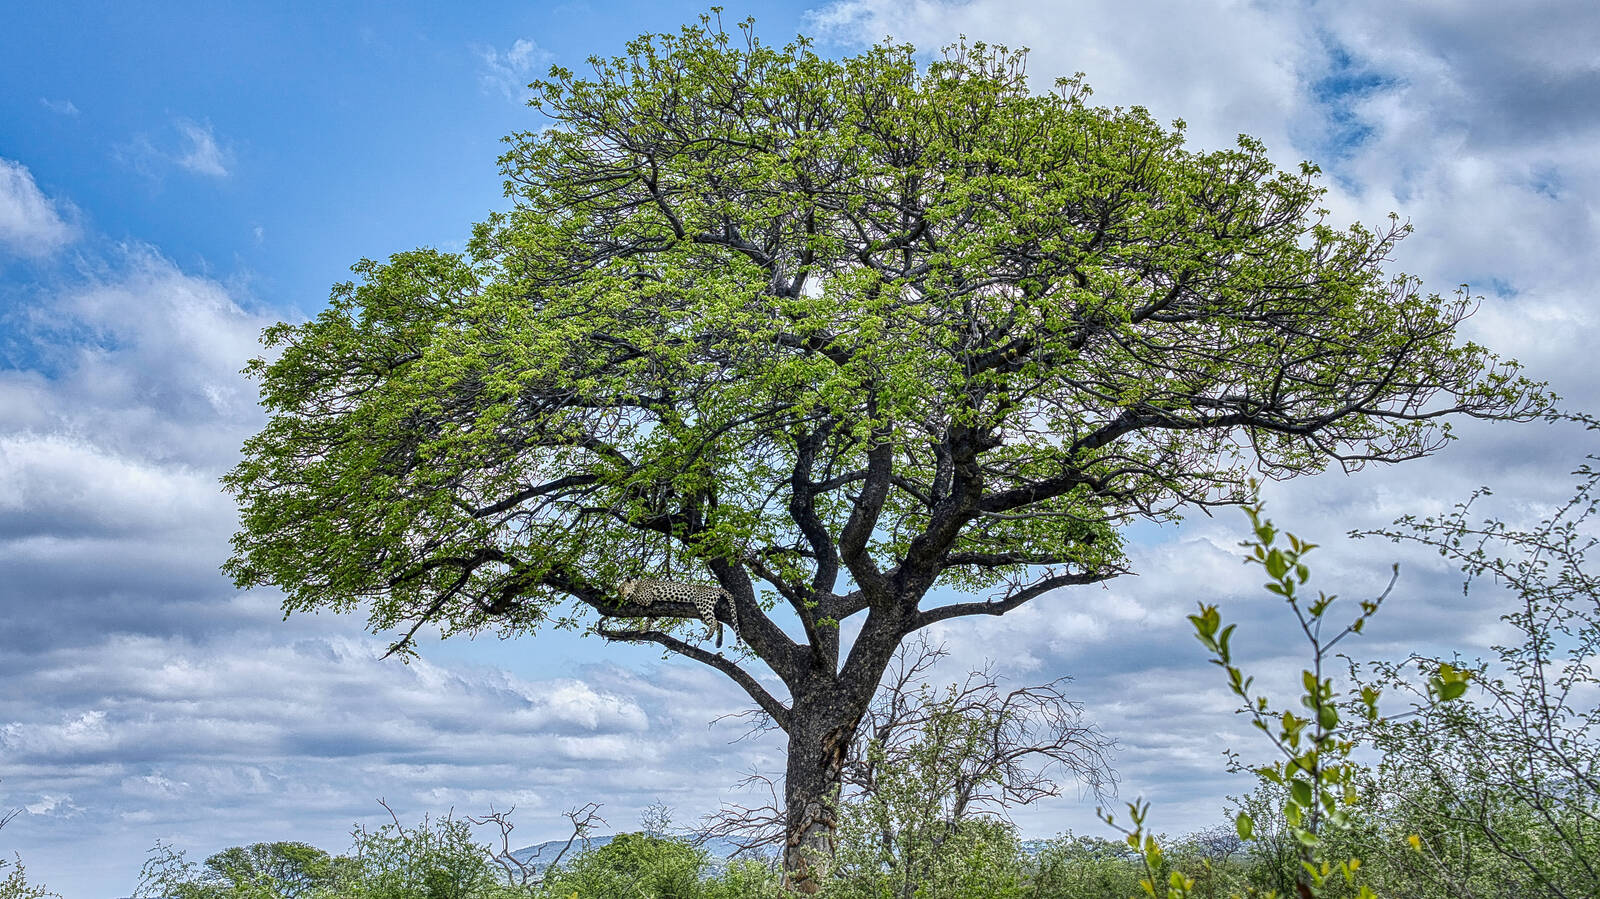 Image of Madikwe Game Reserve by Angie Birmingham